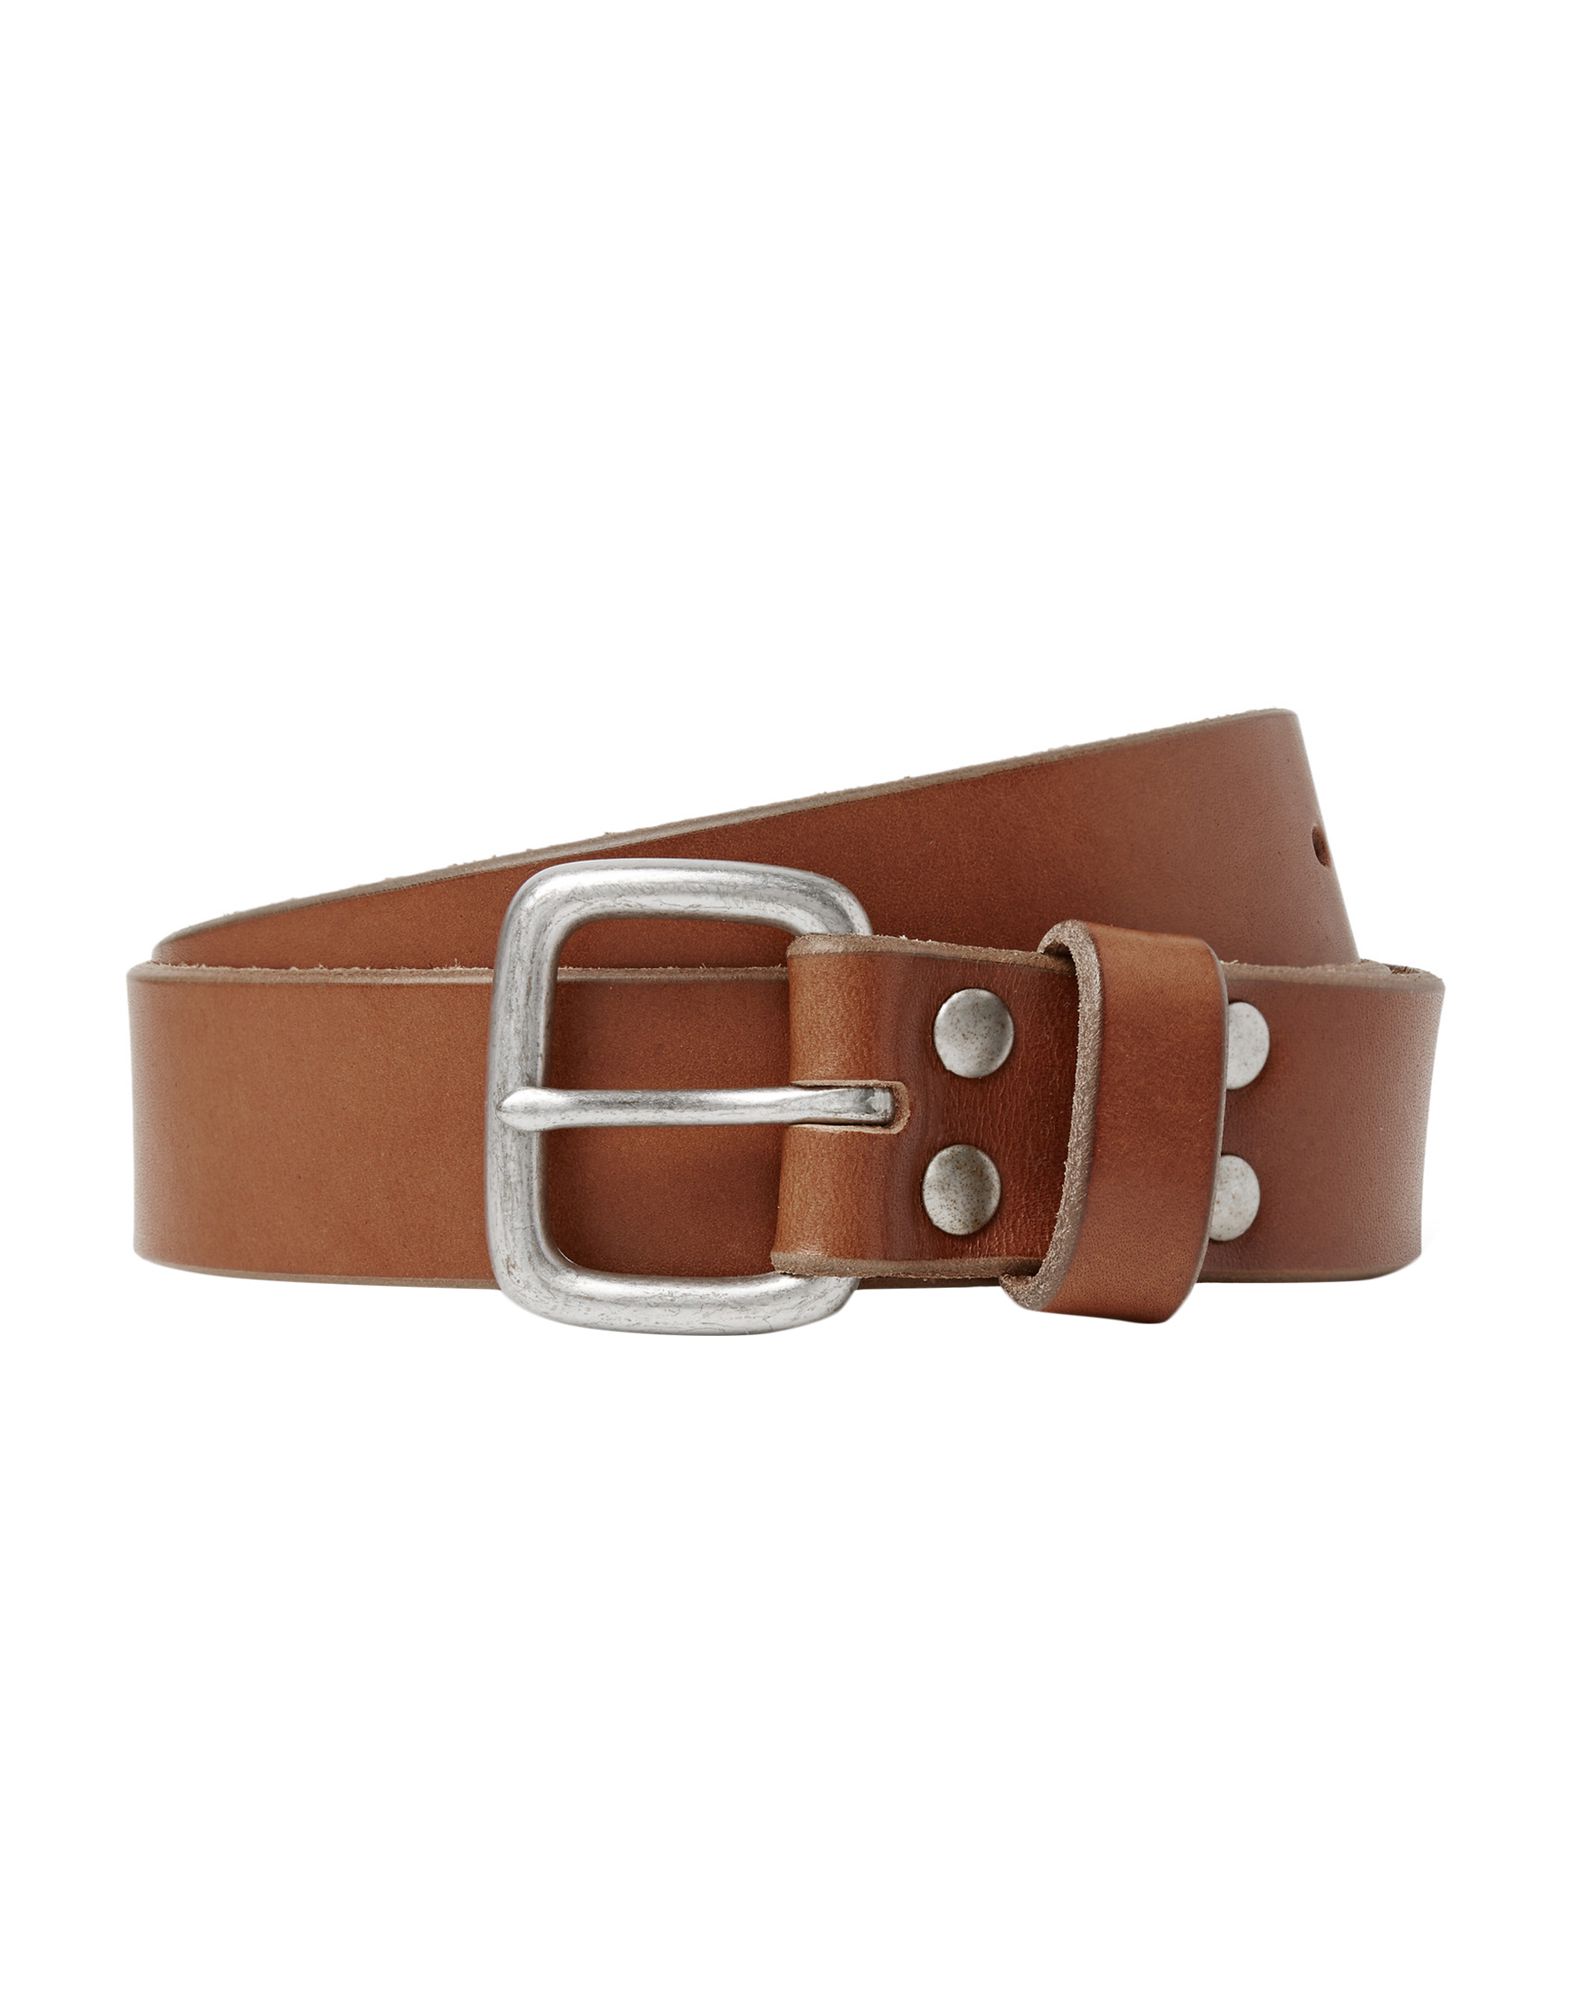 JCREW Leather belt,46578174GI 14